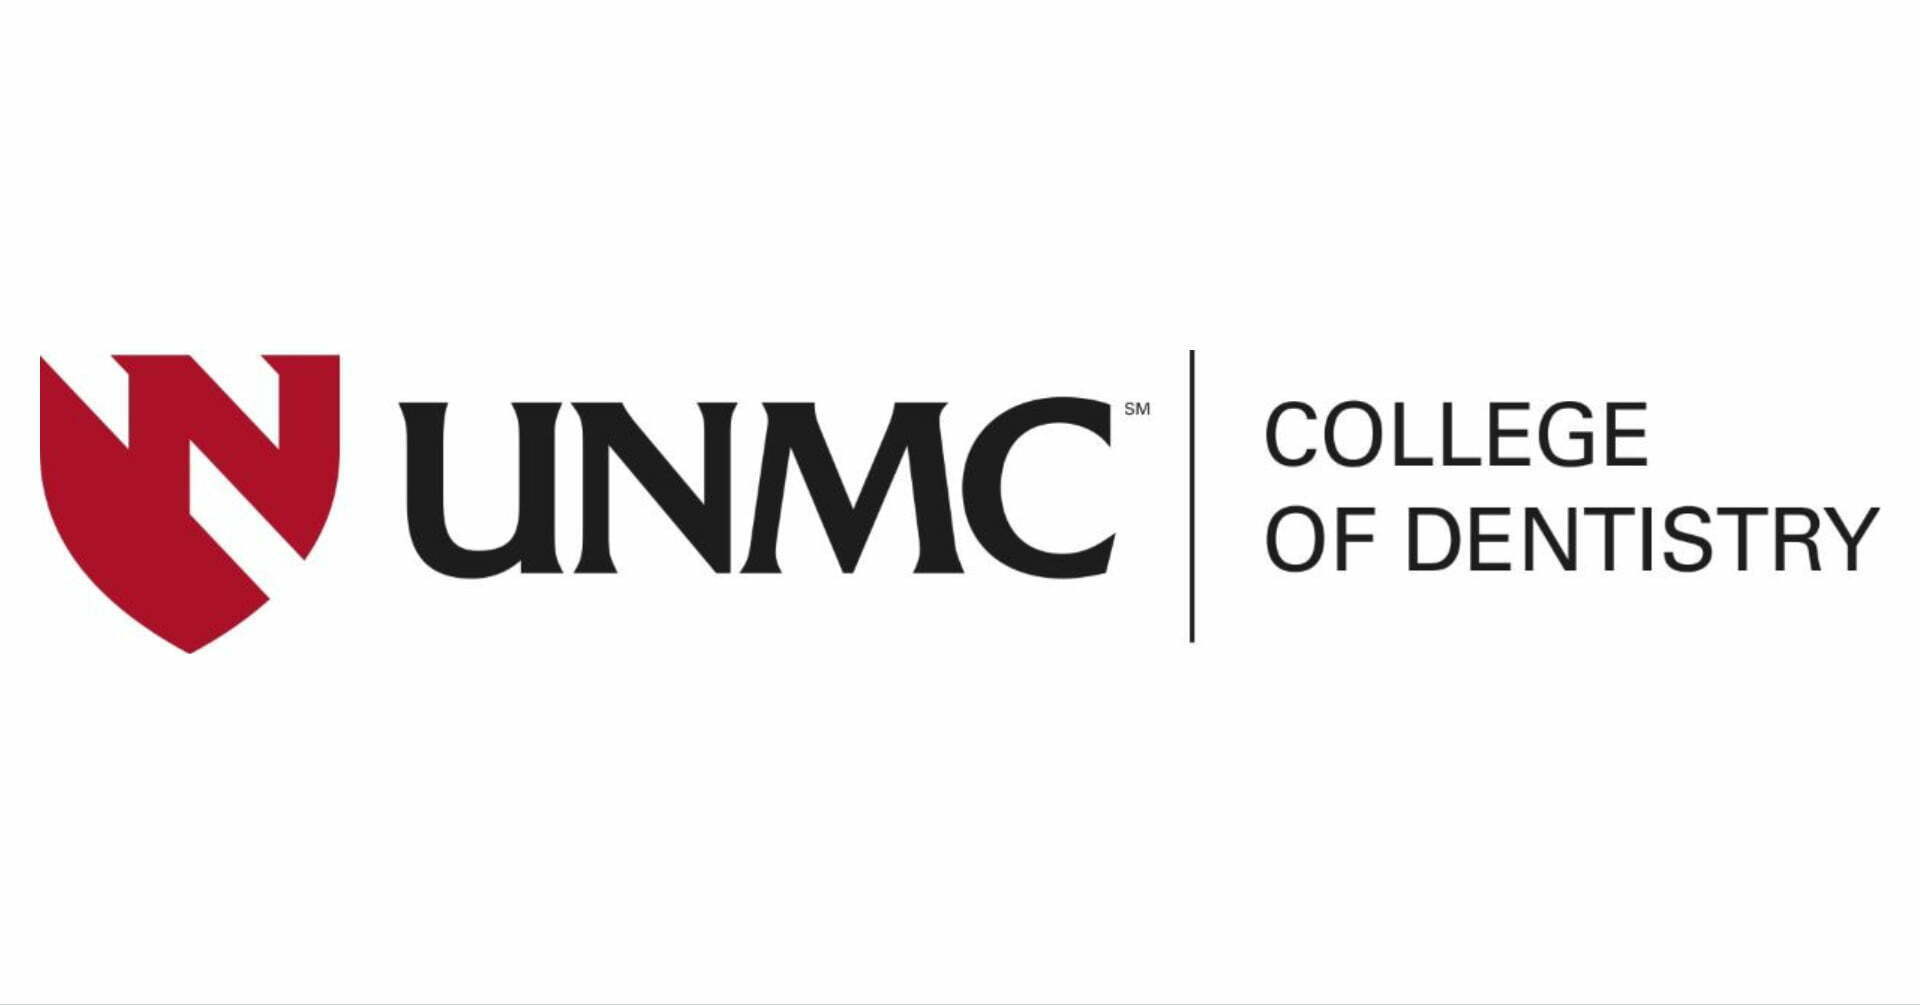 UNMC College of Dentistry logo